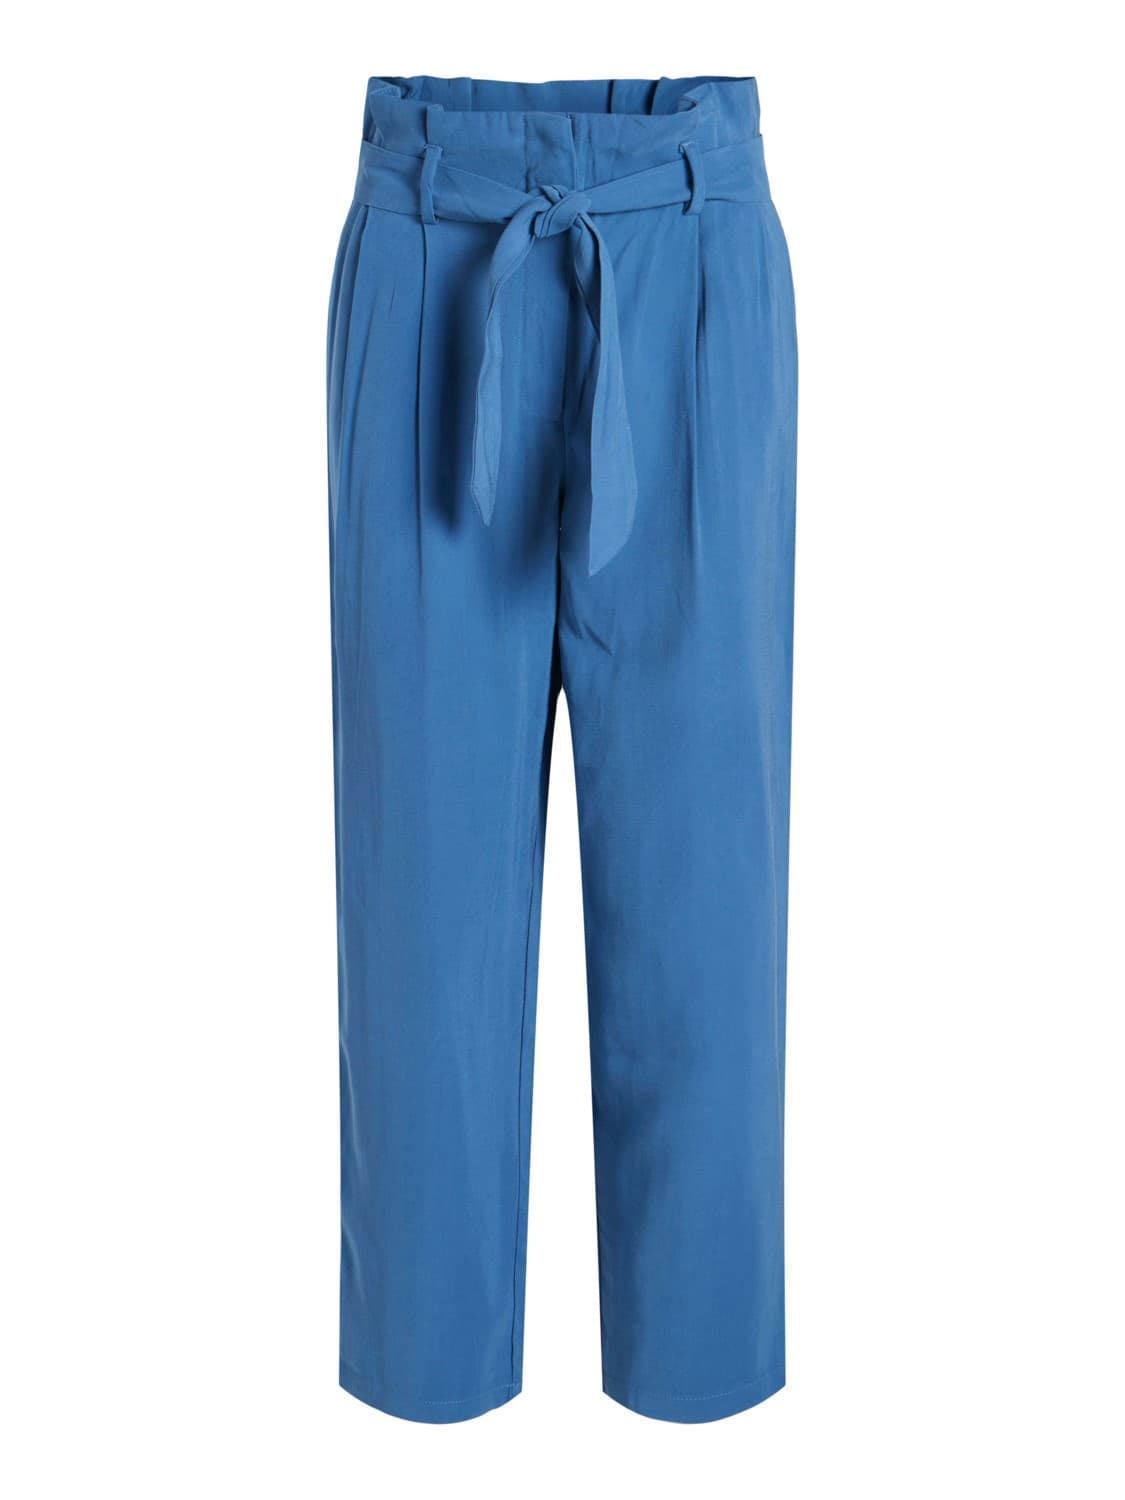 Pantalón azul vikaya - Imagen 3